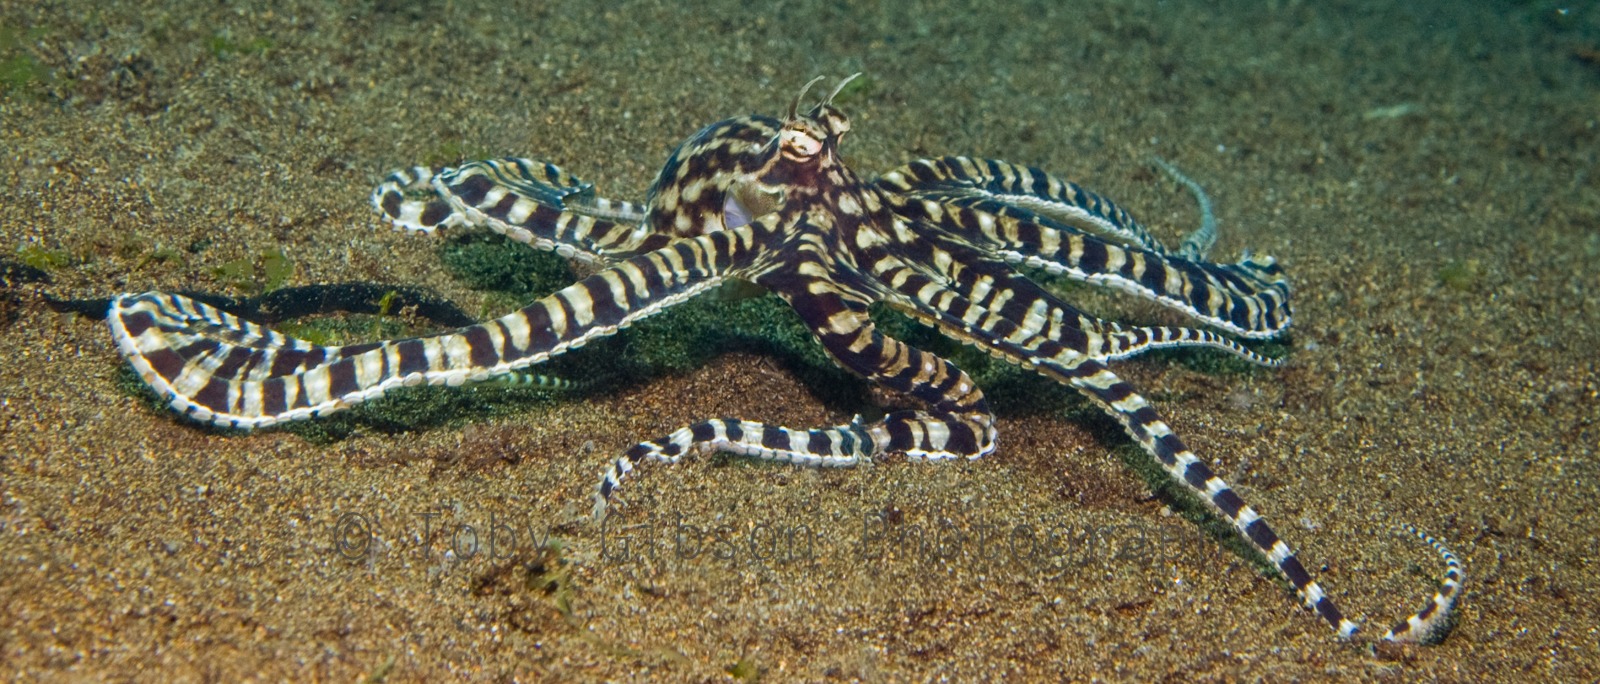 Mimic Octopus in Shooting Wildlife Exhibition